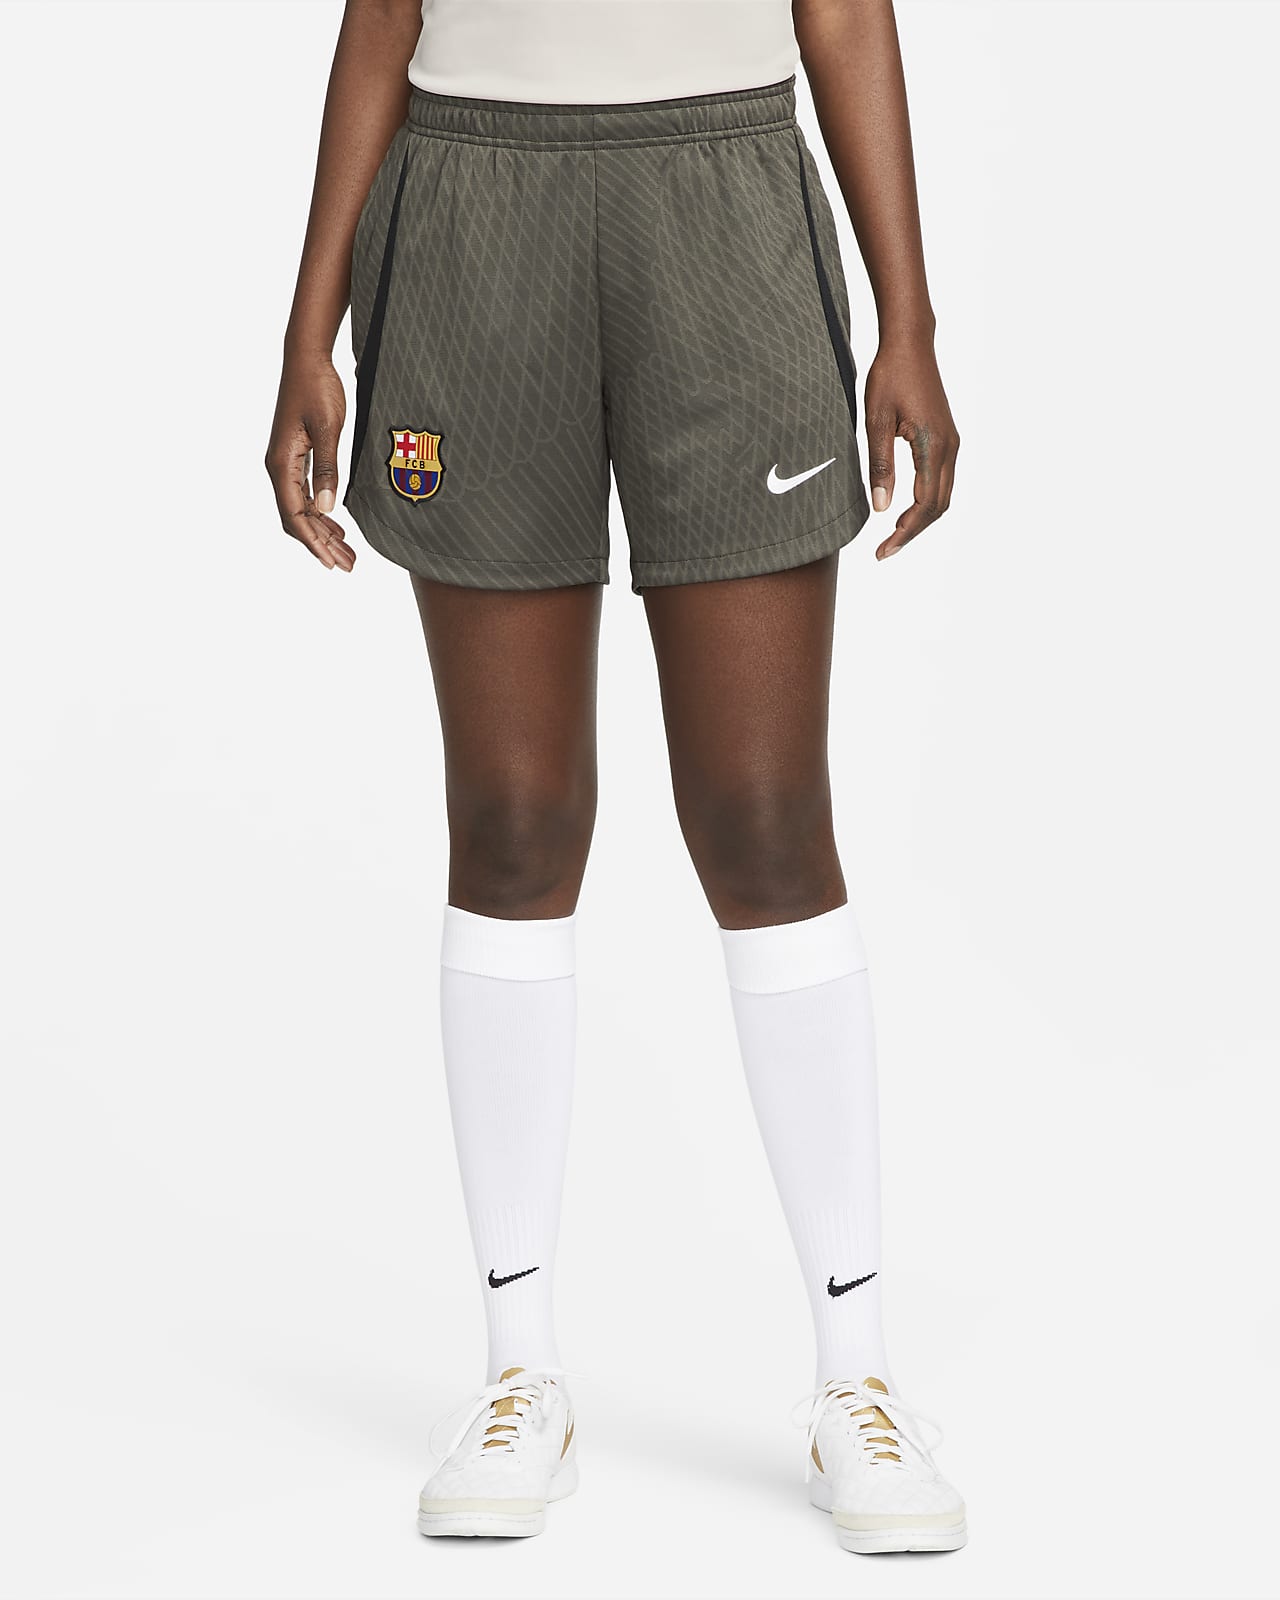 Women's Shorts. Nike IL